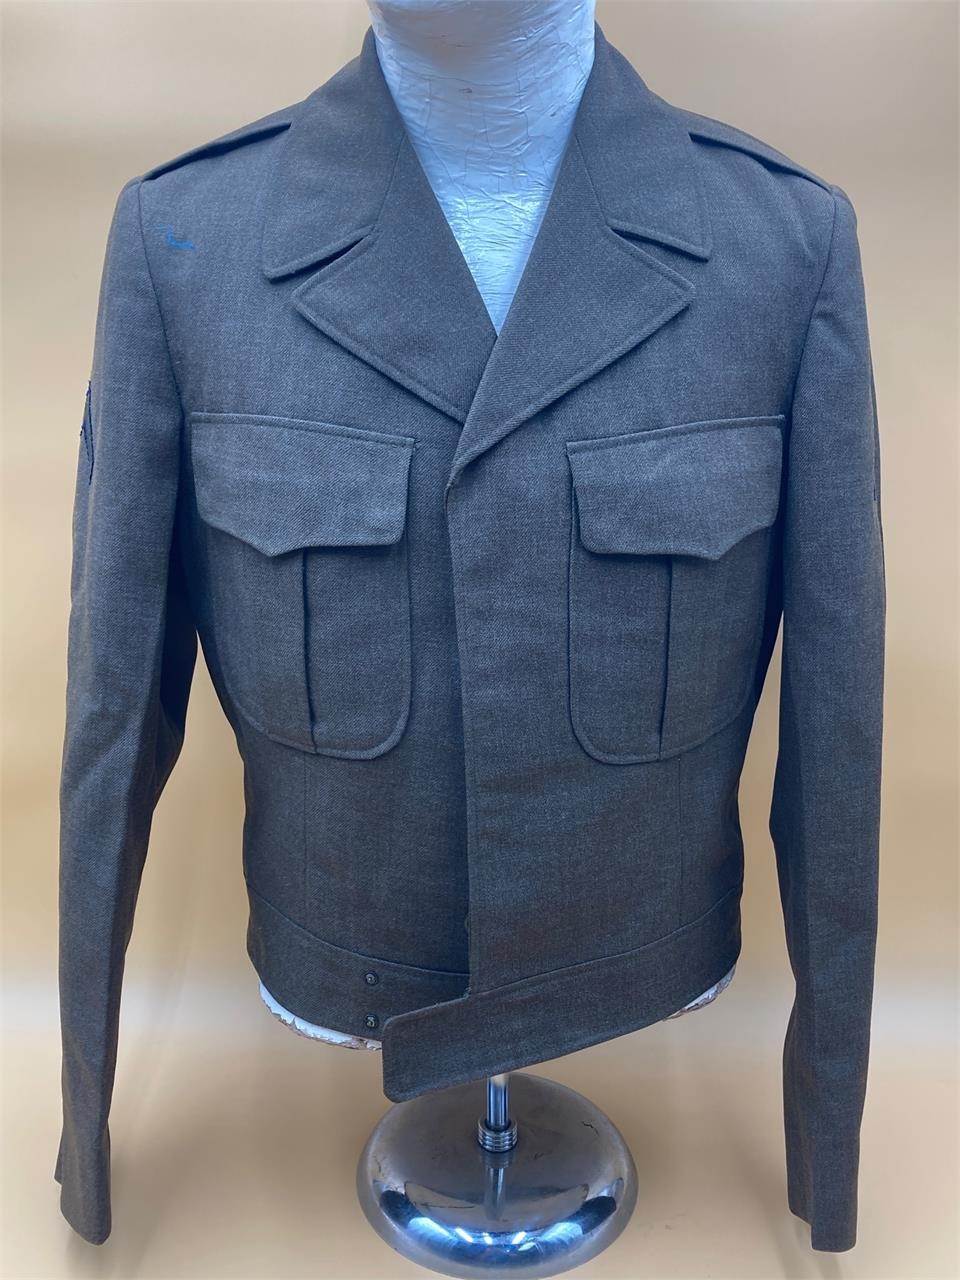 Korean War Era US Army Service Jacket